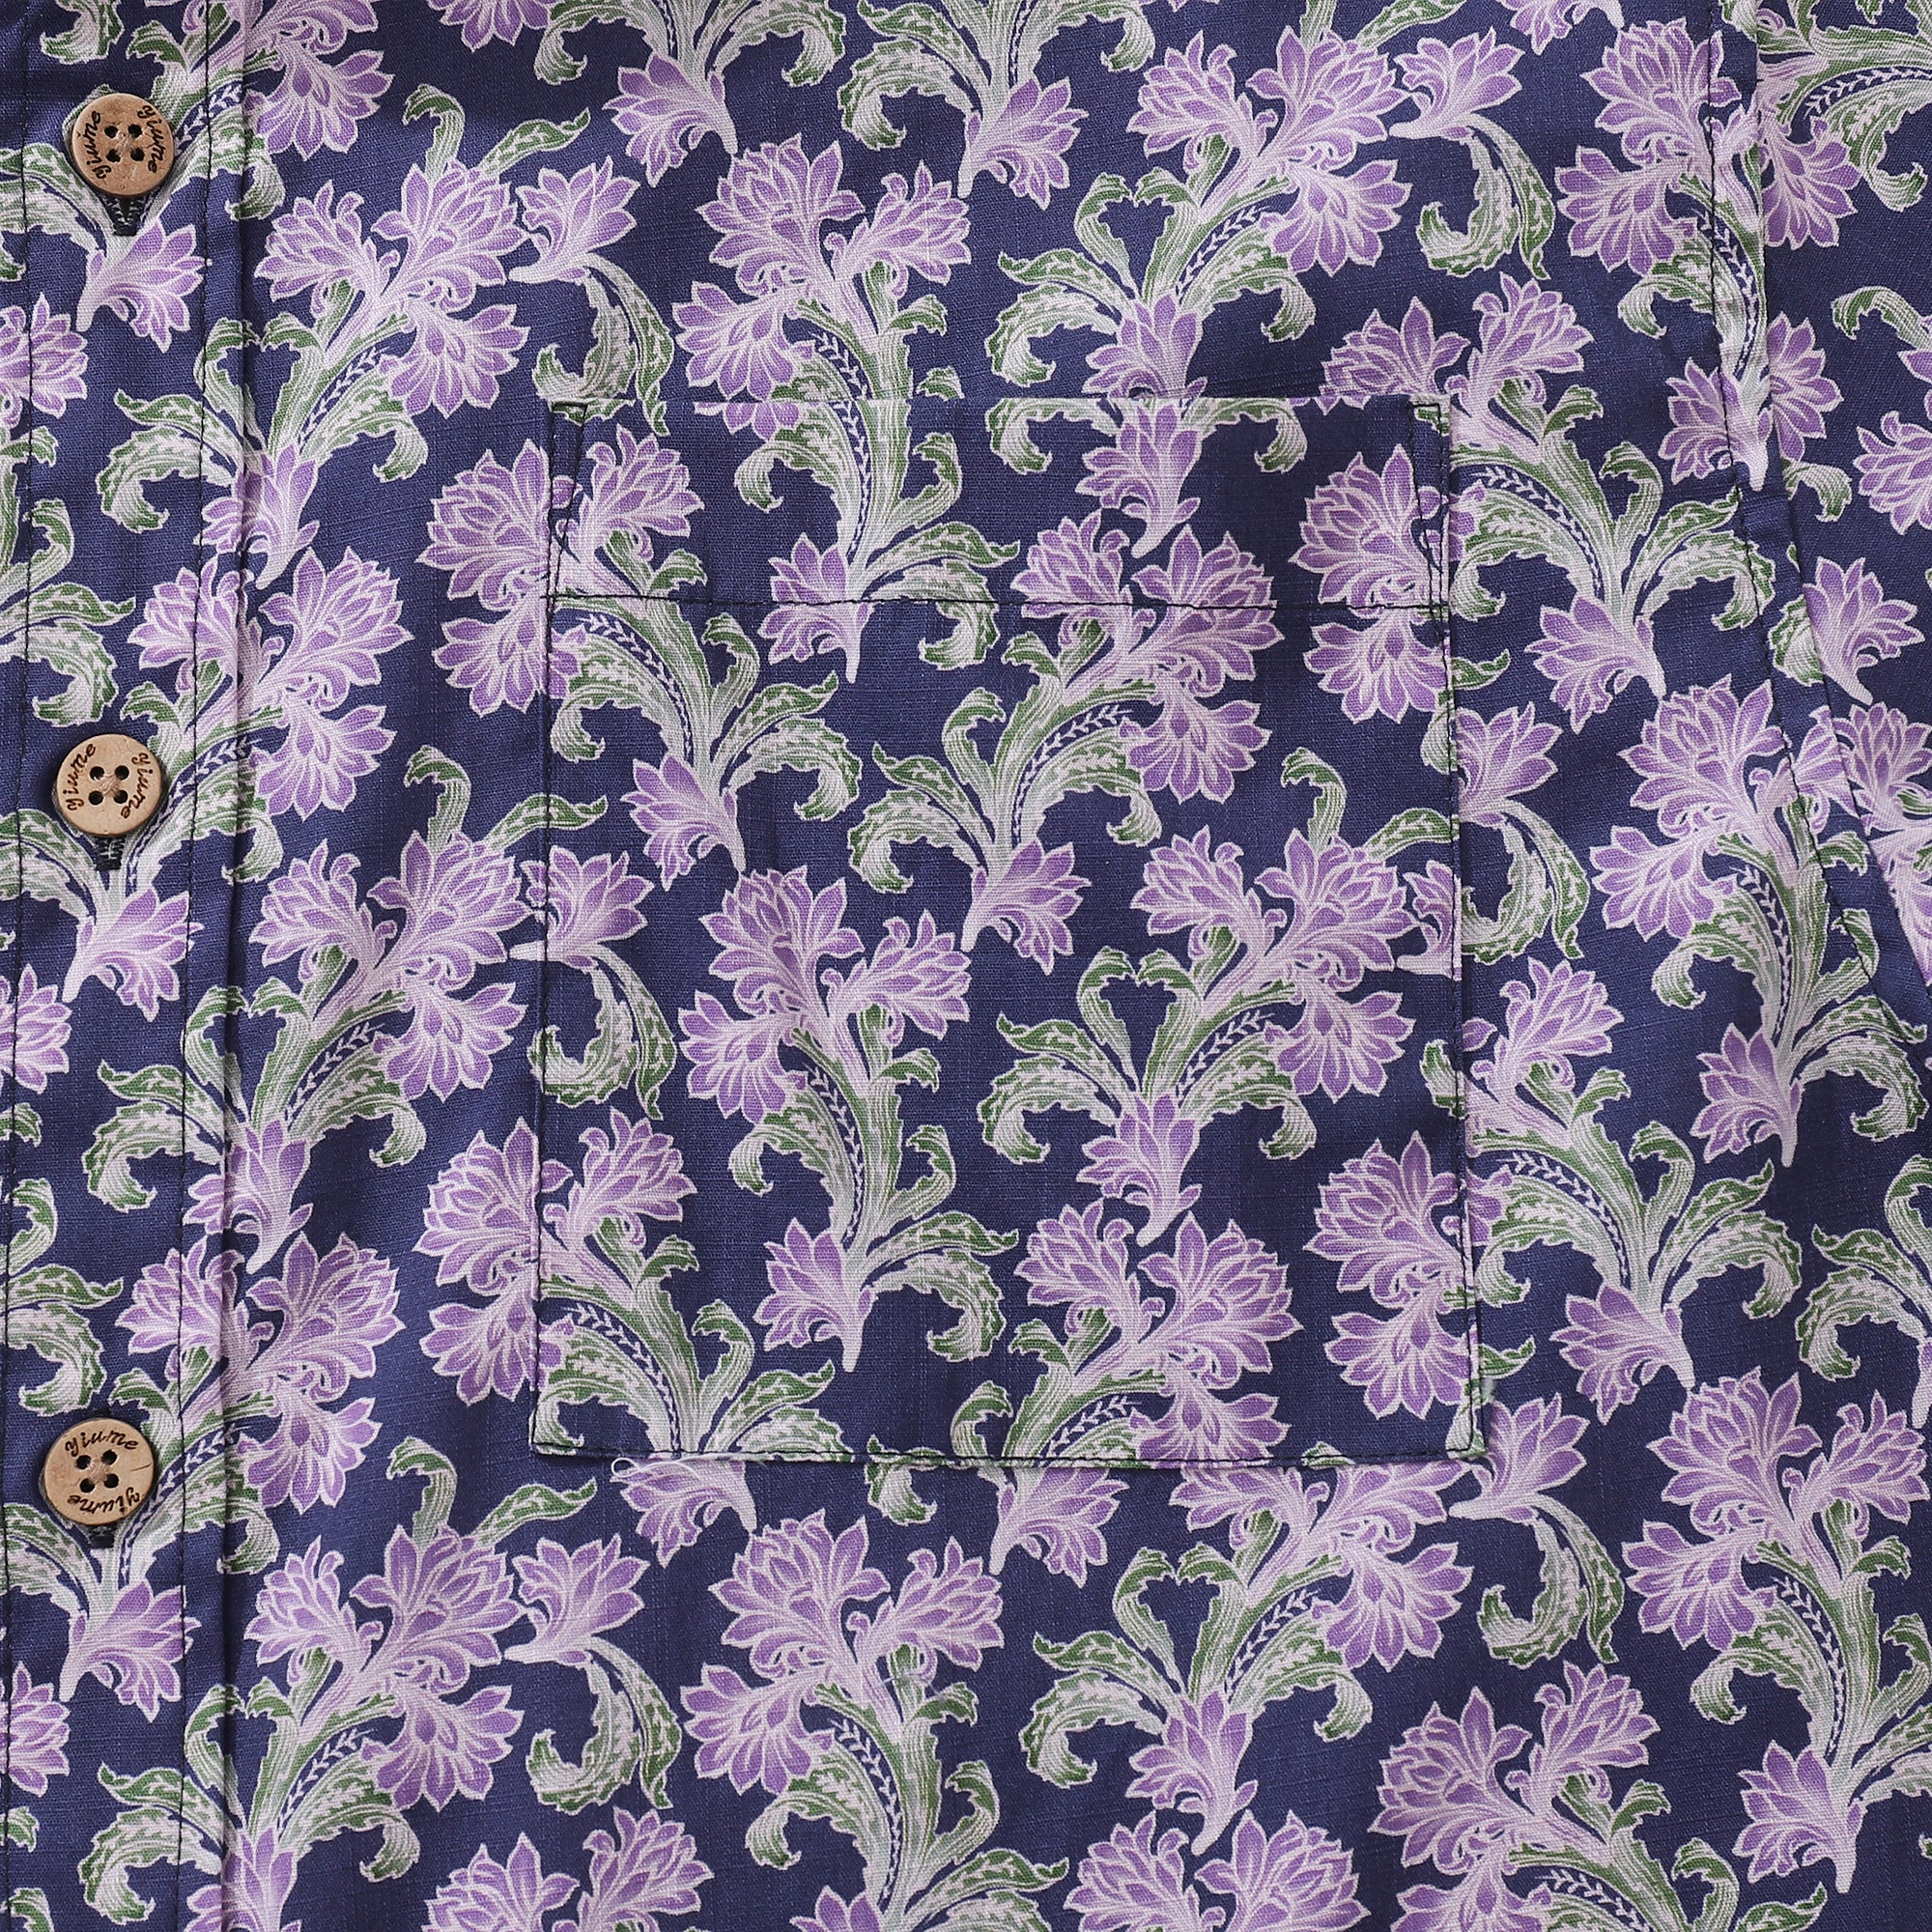 Men's Hawaiian Shirt Button Down Morris Shirt Purple Floral Cotton Aloha Shirt